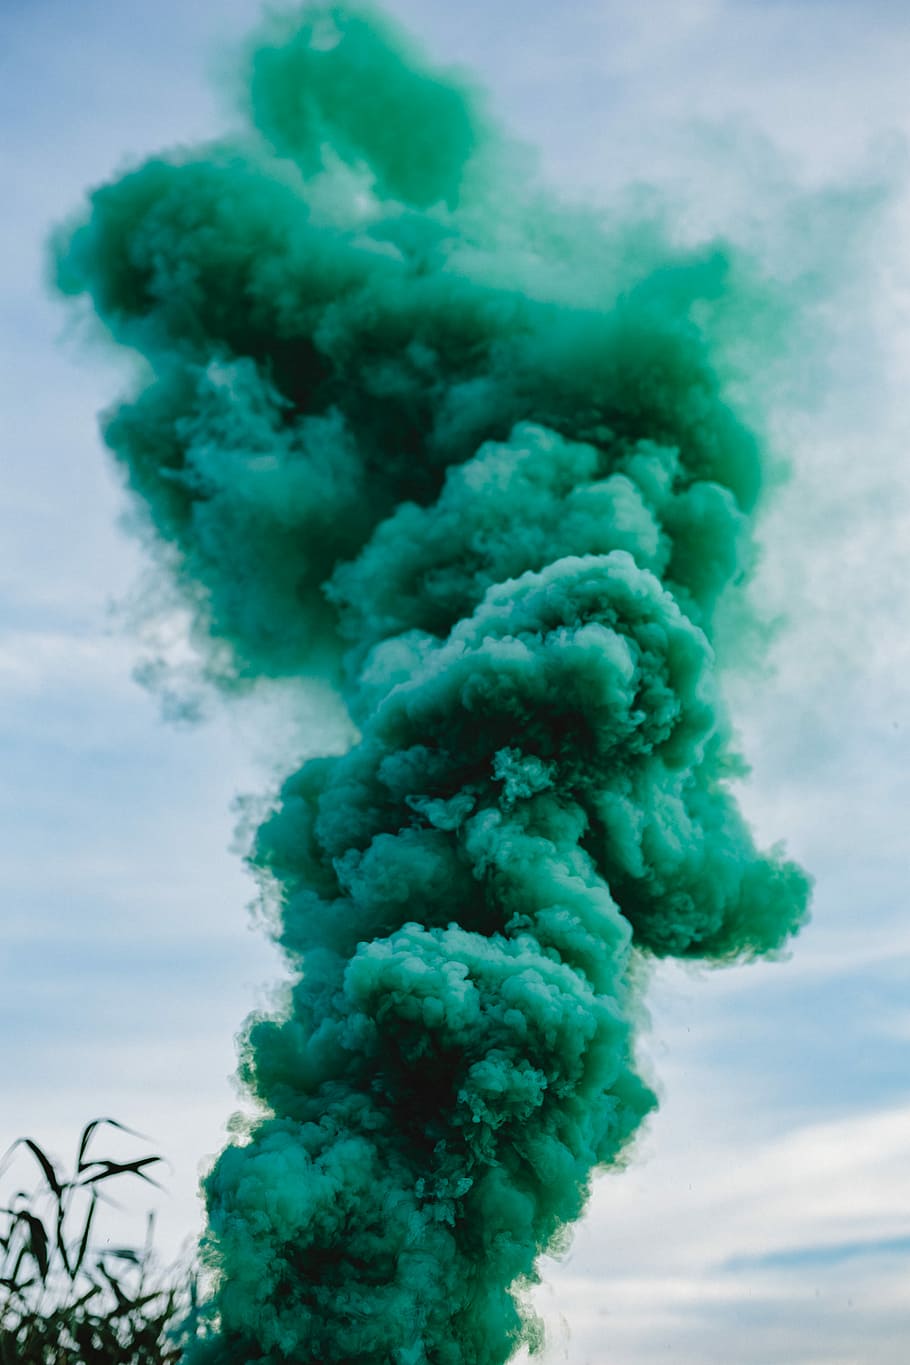 bom asap hijau, bom asap, abstrak, latar belakang, luar ruangan, asap hijau, hijau, alam, langit, biru